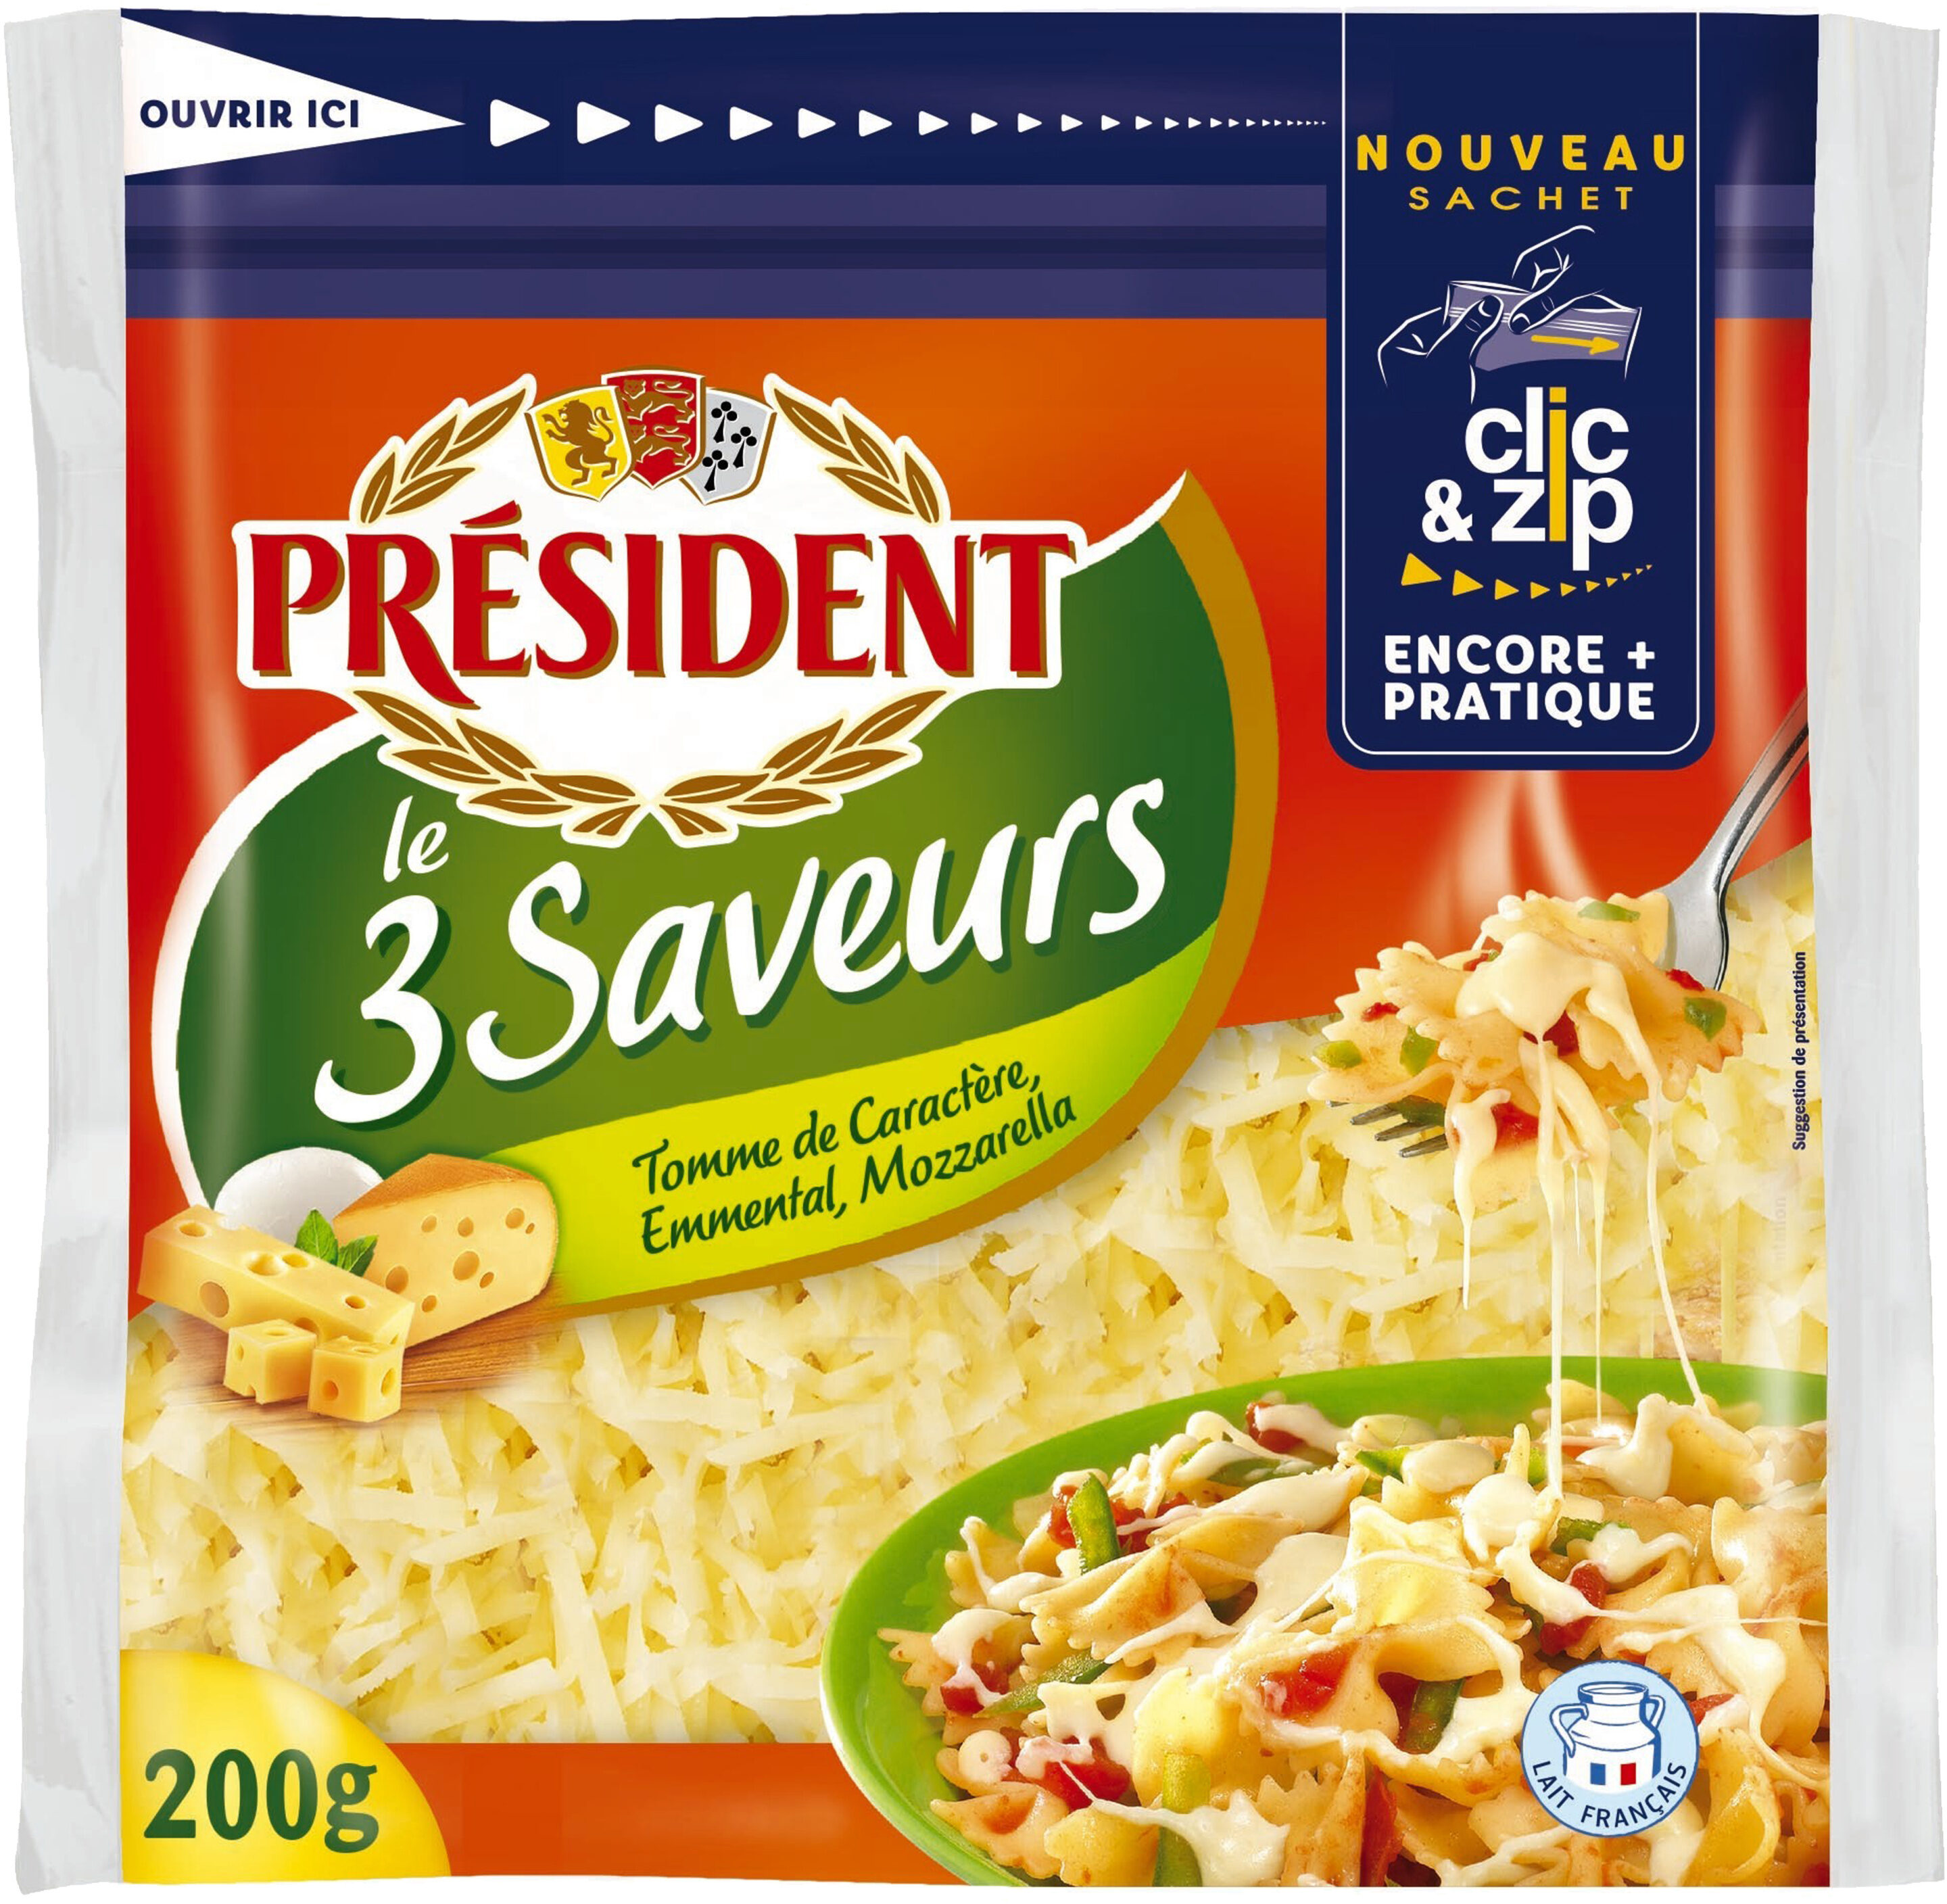 President rape le 3 saveurs 200g - Product - fr